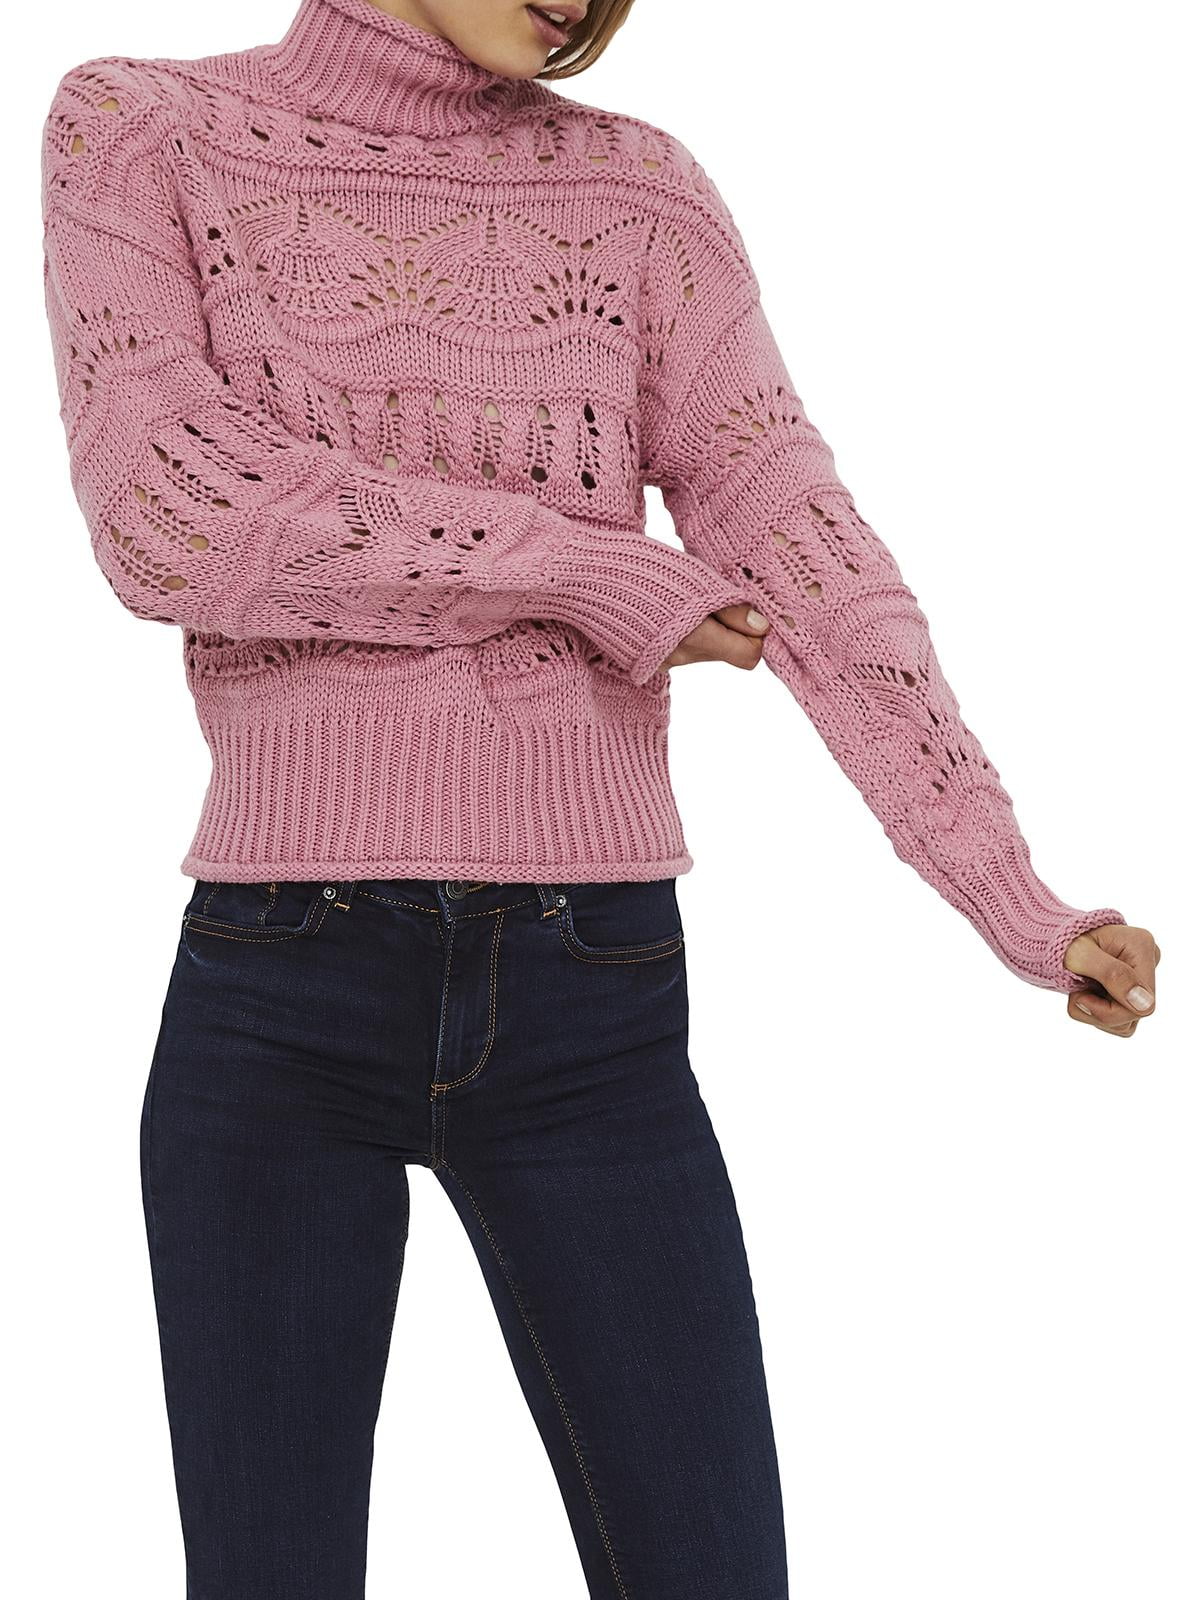 Vero Moda Womens Highneck Blouse Pullover Sweater Pink L - Walmart.com